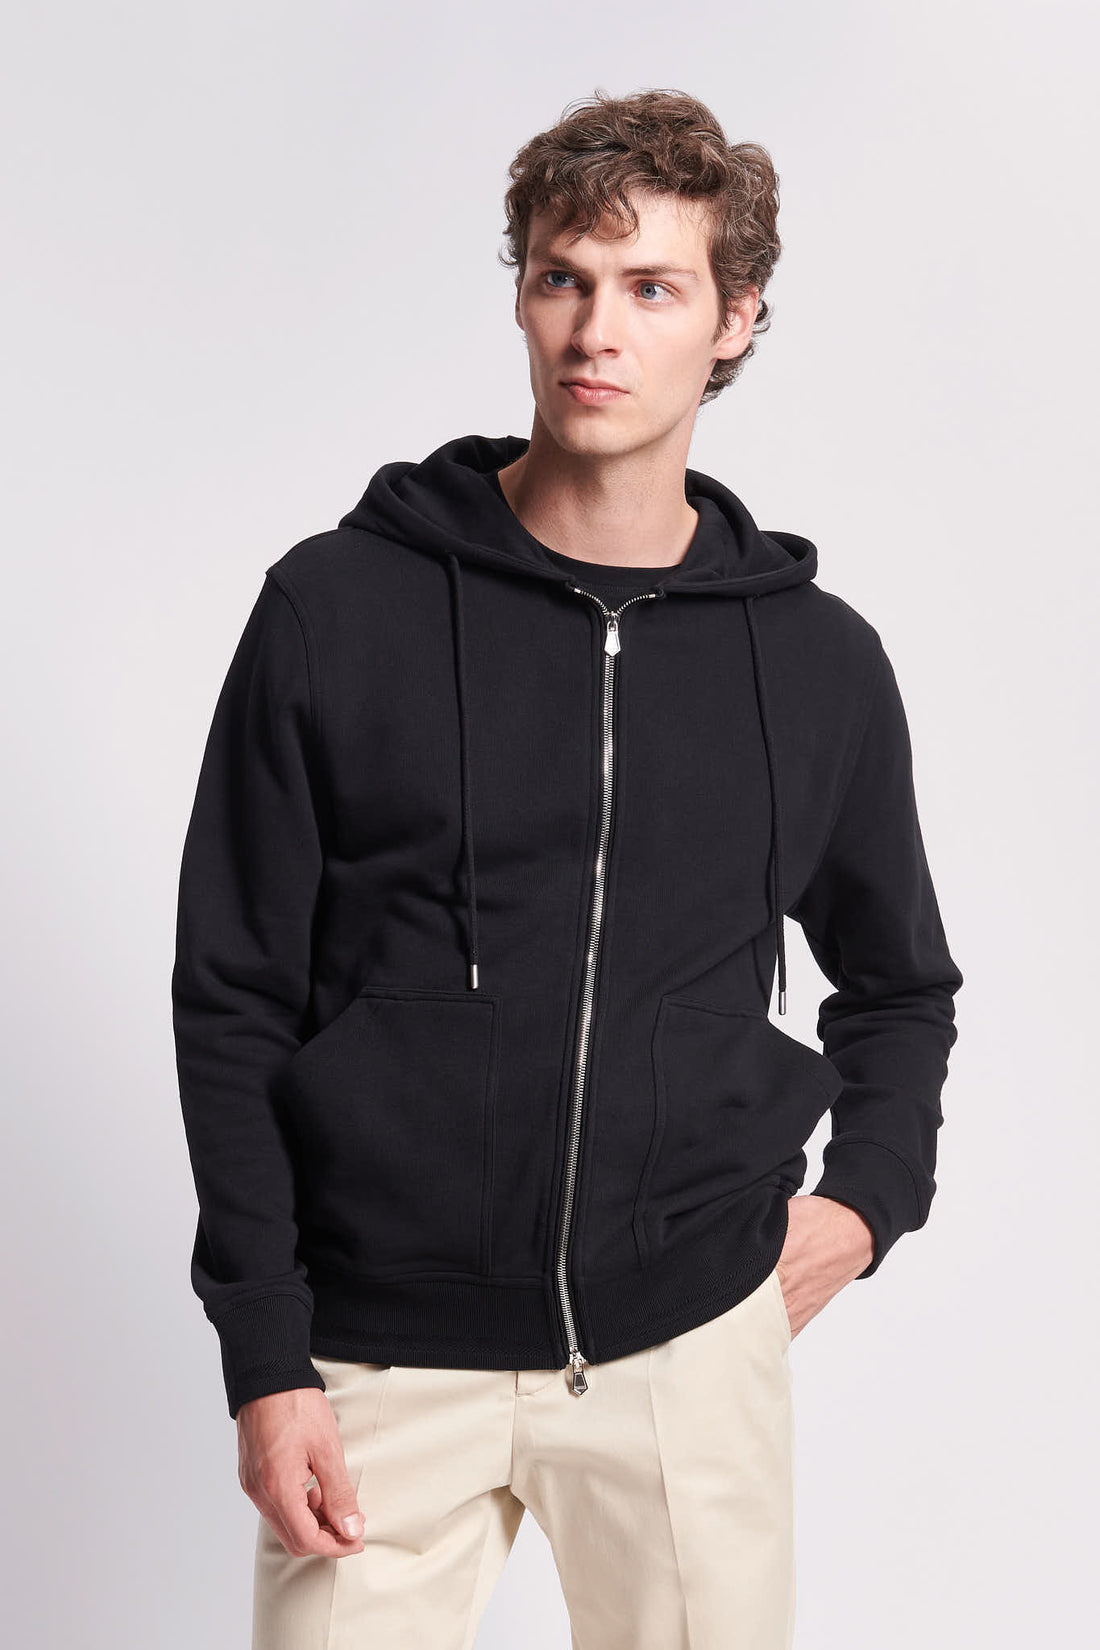 French Terry Zip Through Hooded Sweatshirt Black